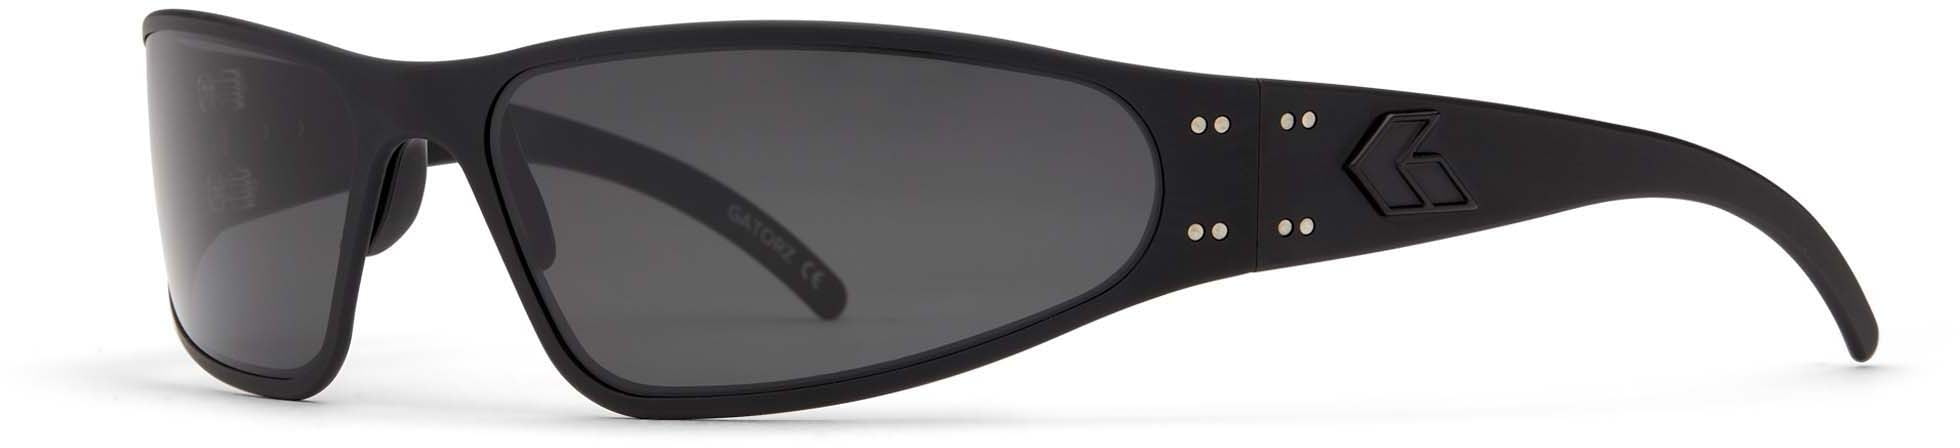 Gatorz Wra Sunglasses- Black Frame Grey Lens WRABLK01MBP